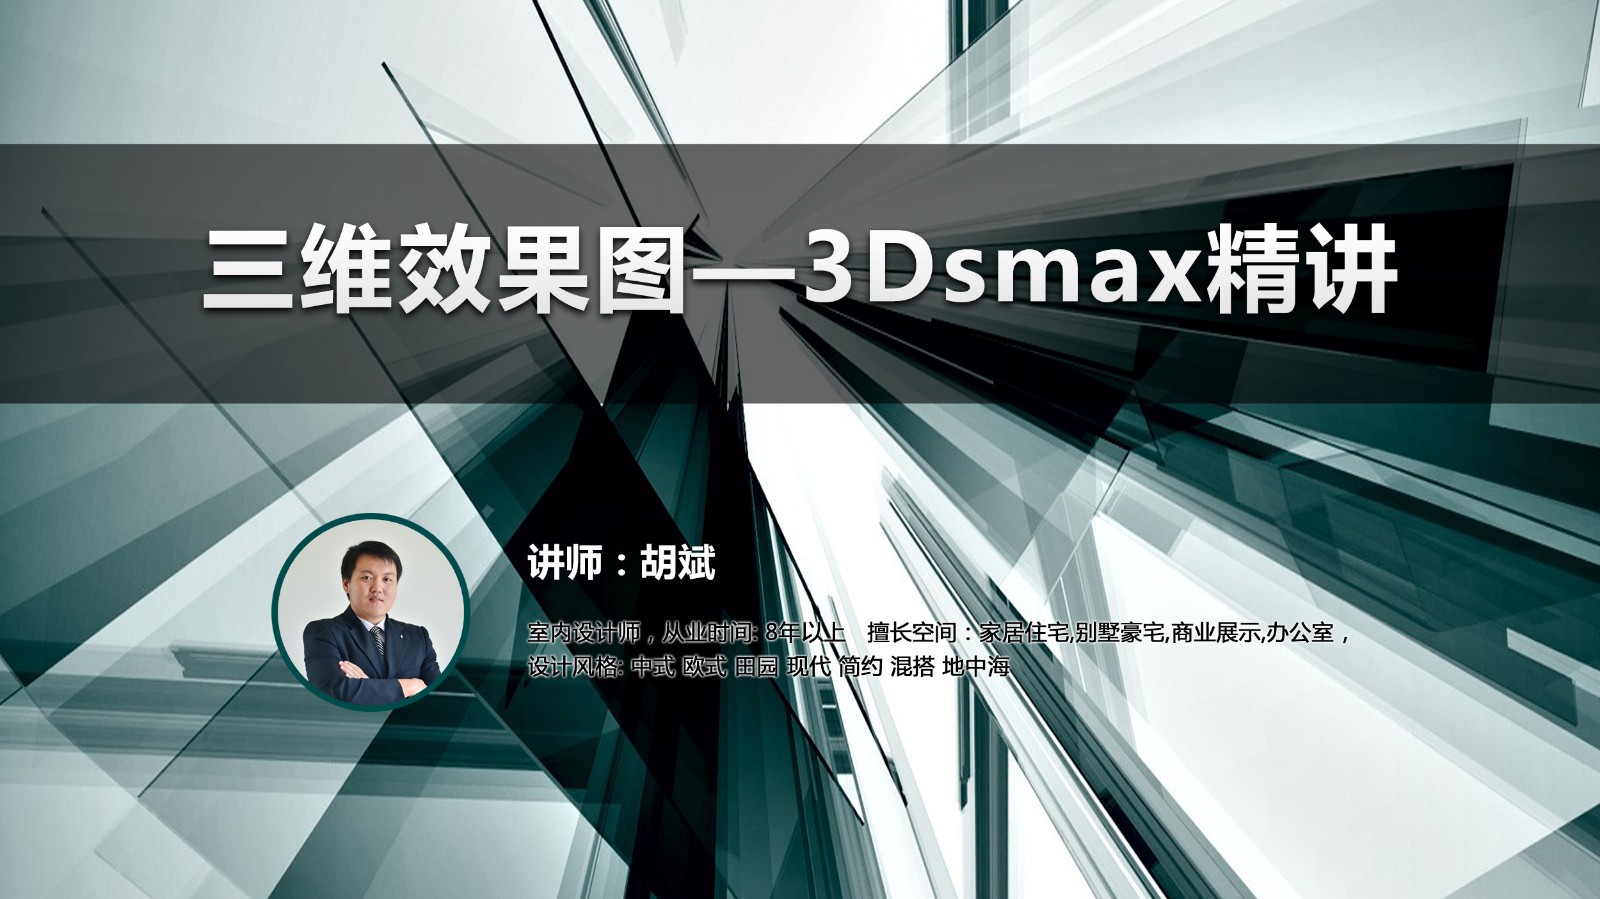  3Dsmax intensive video tutorial